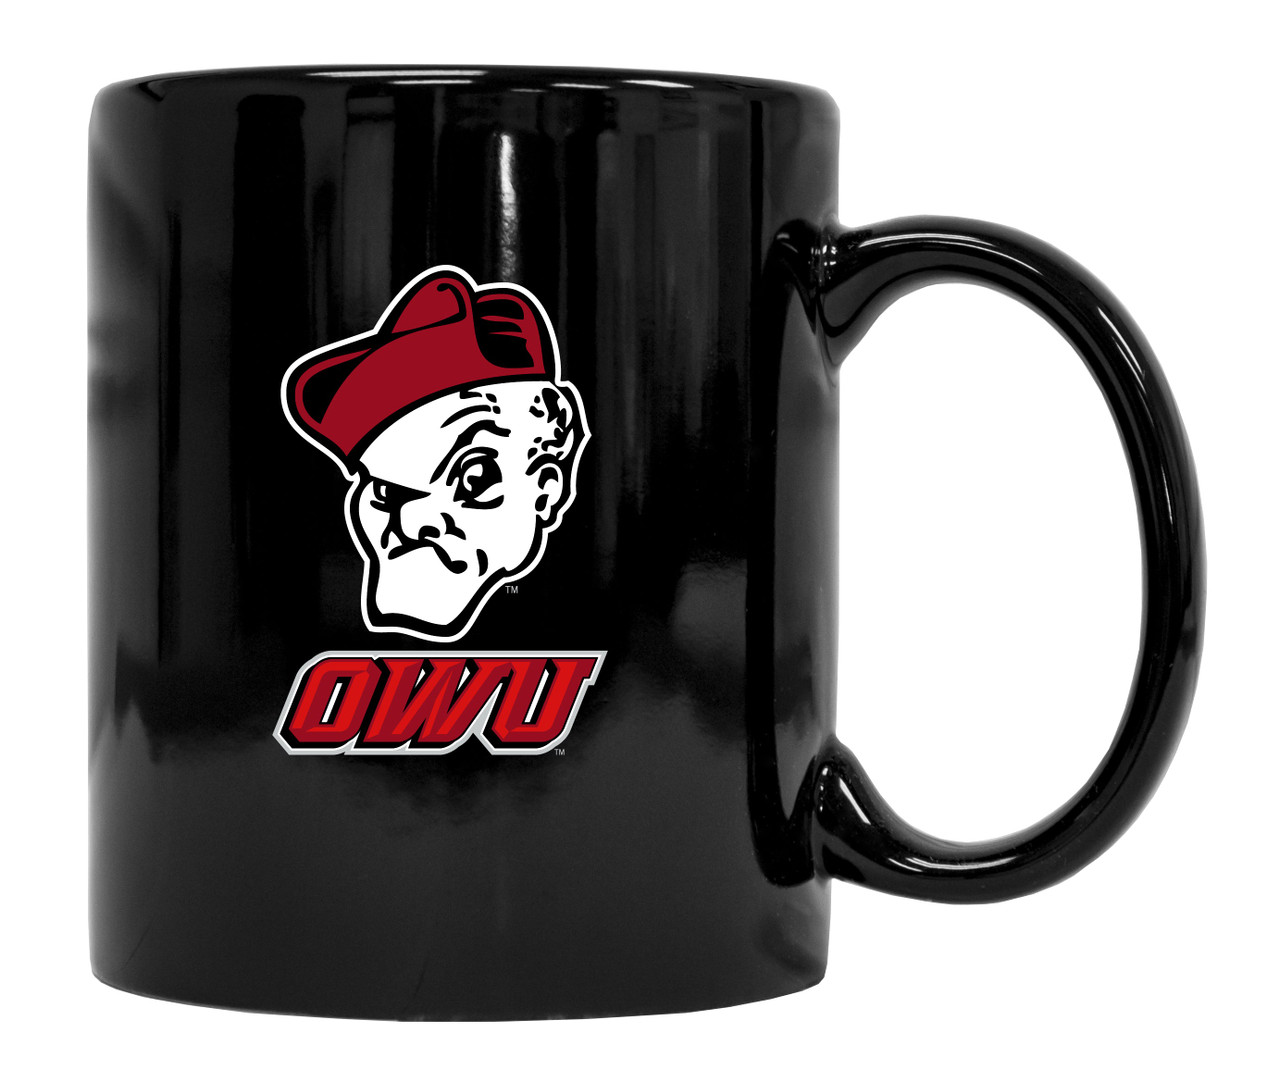 Ohio Wesleyan University Black Ceramic Mug 2-Pack (Black).